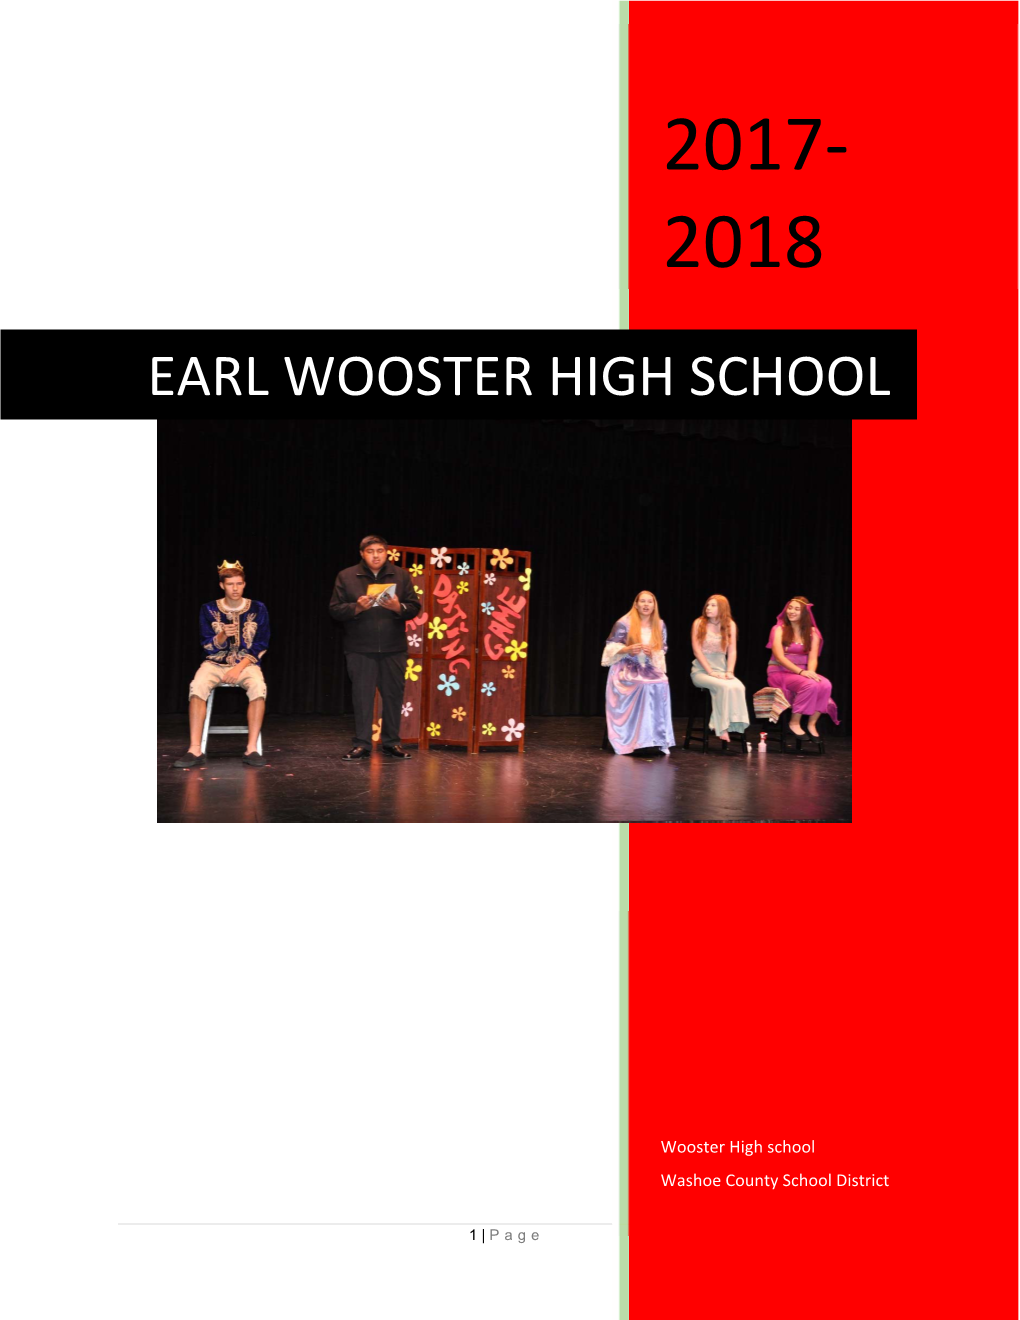 Earl Wooster High School